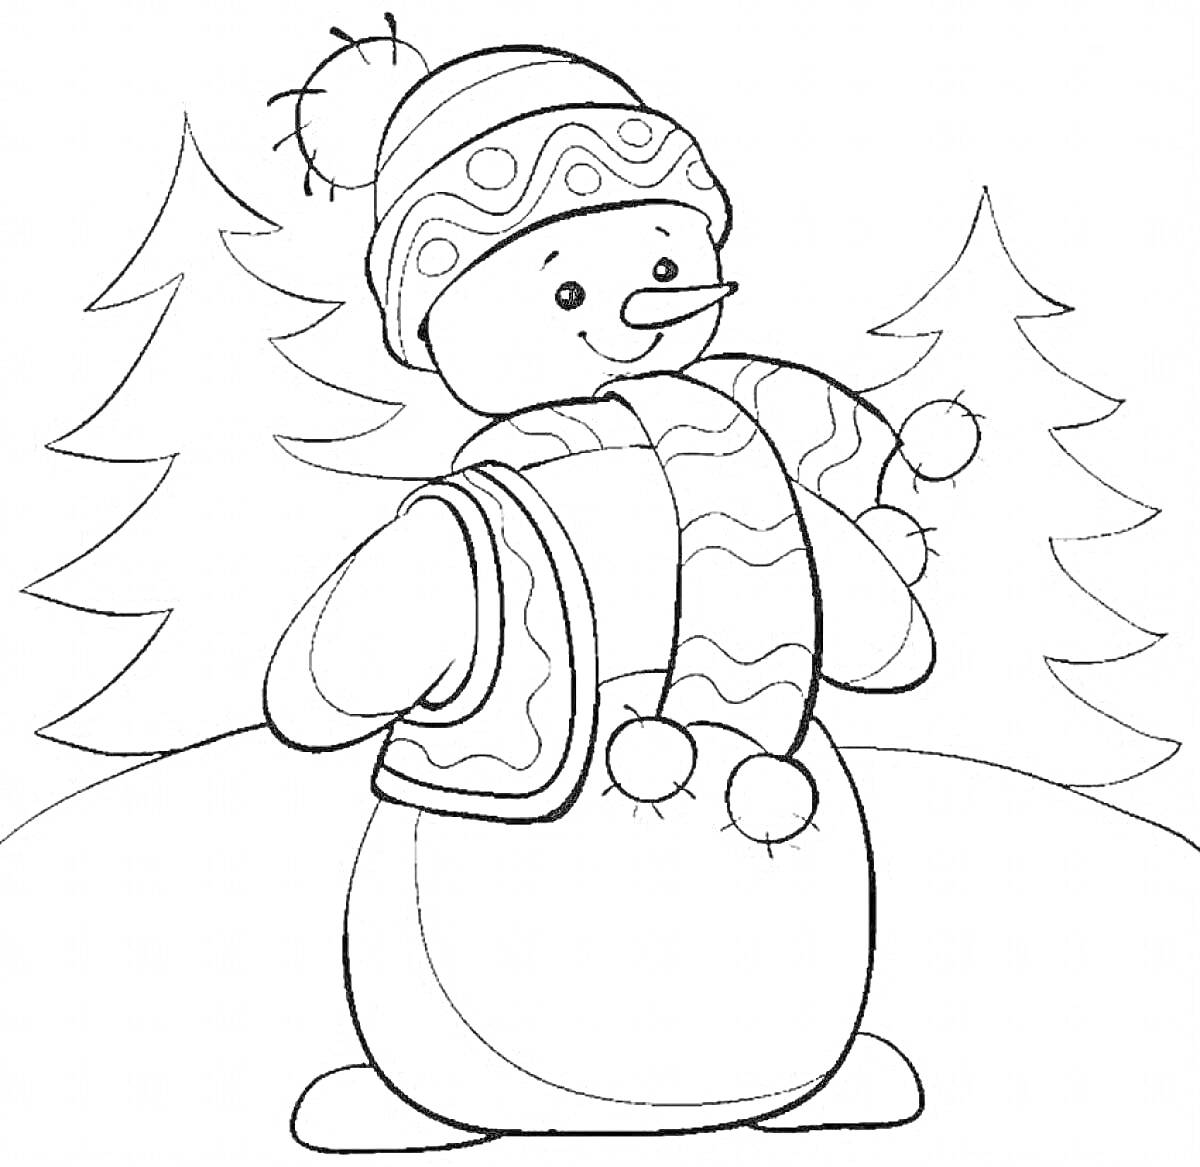 Раскраска Снеговик в шарфе и шапке на фоне елок